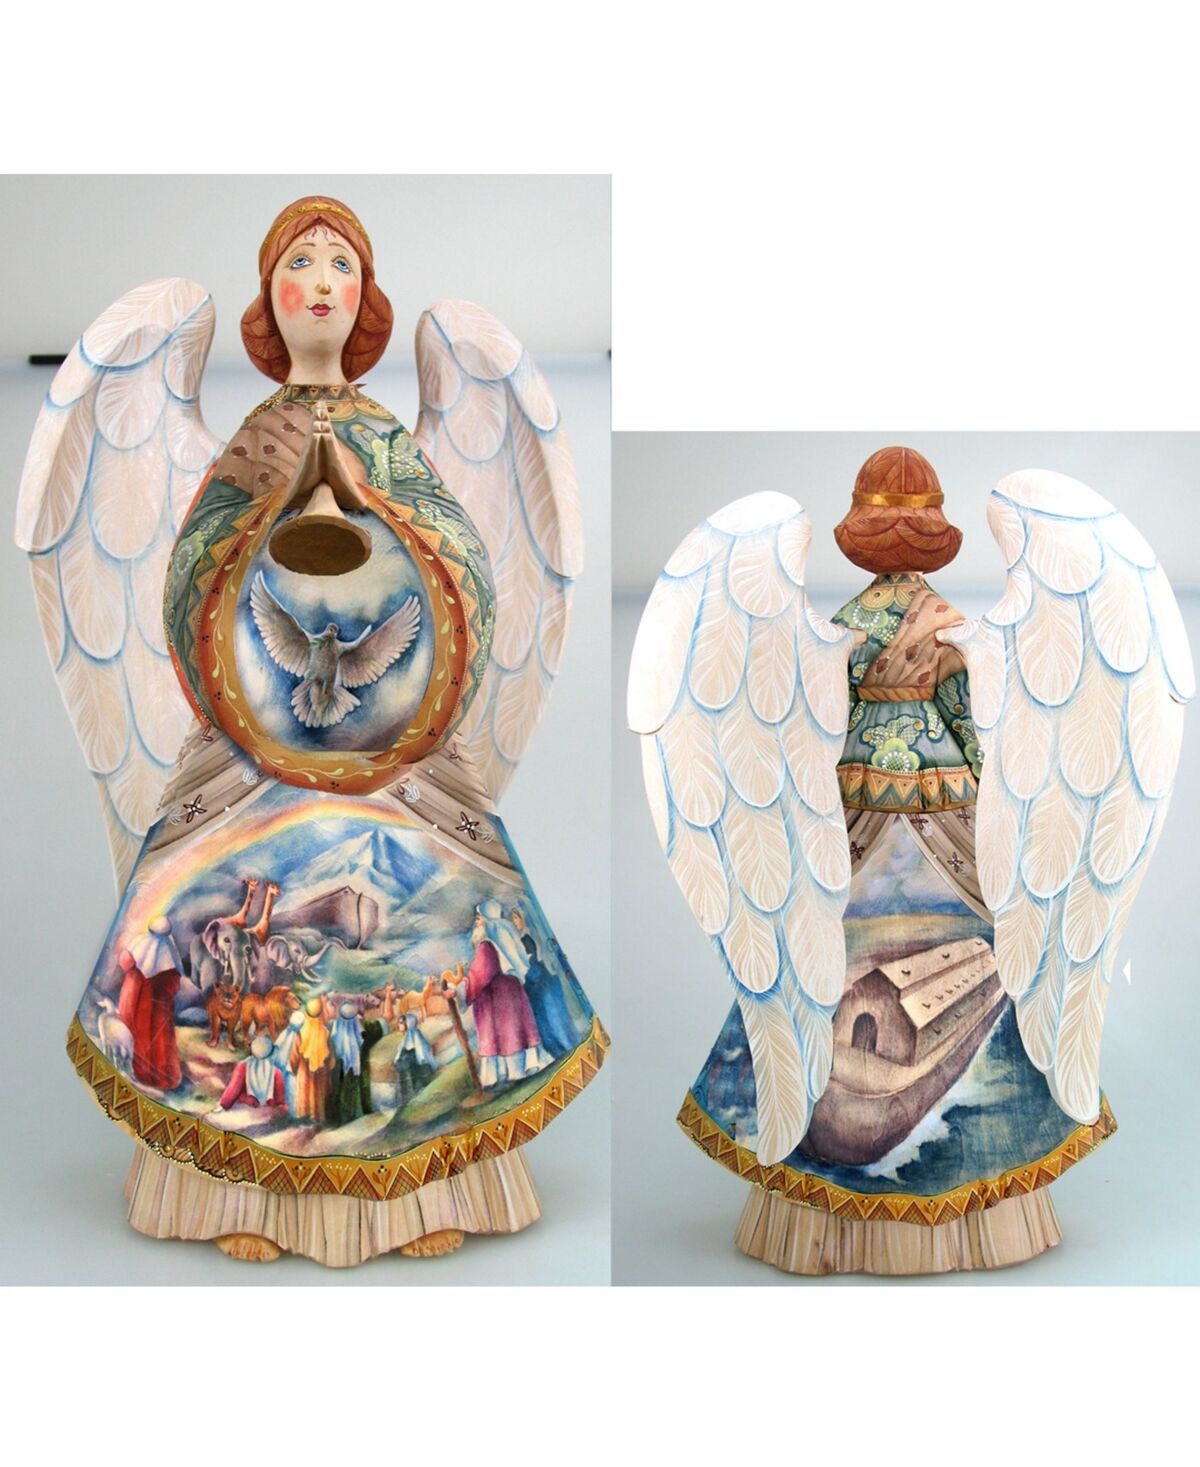 G.DeBrekht Woodcarved and Hand Painted Noah Ark Angel Santa Figurine - Multi